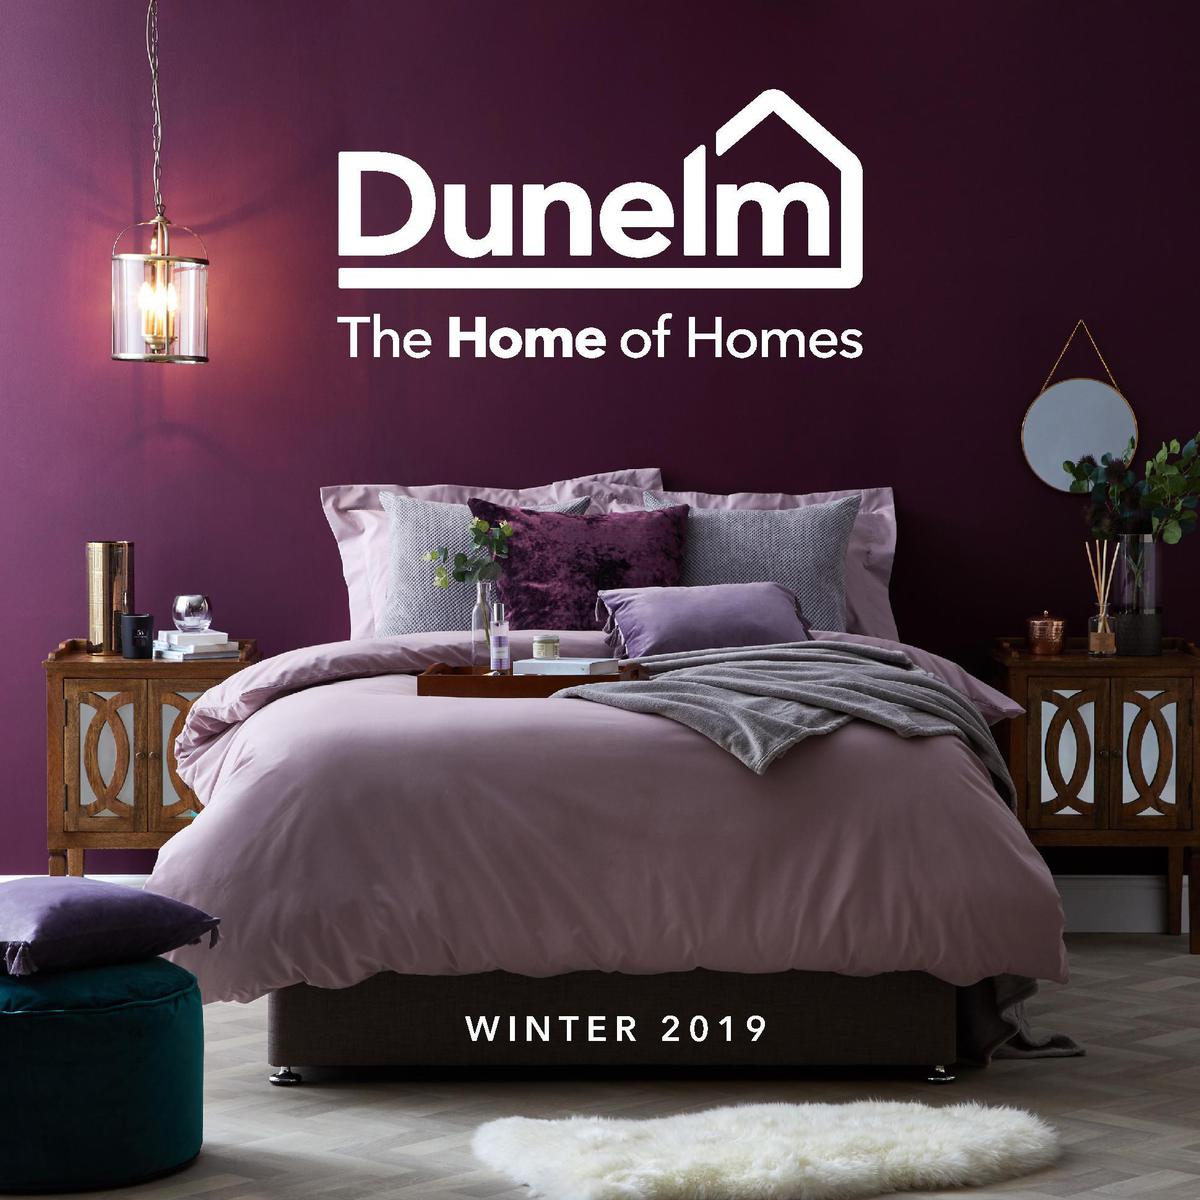 Dunelm Winter 2019 Offers from 10 October